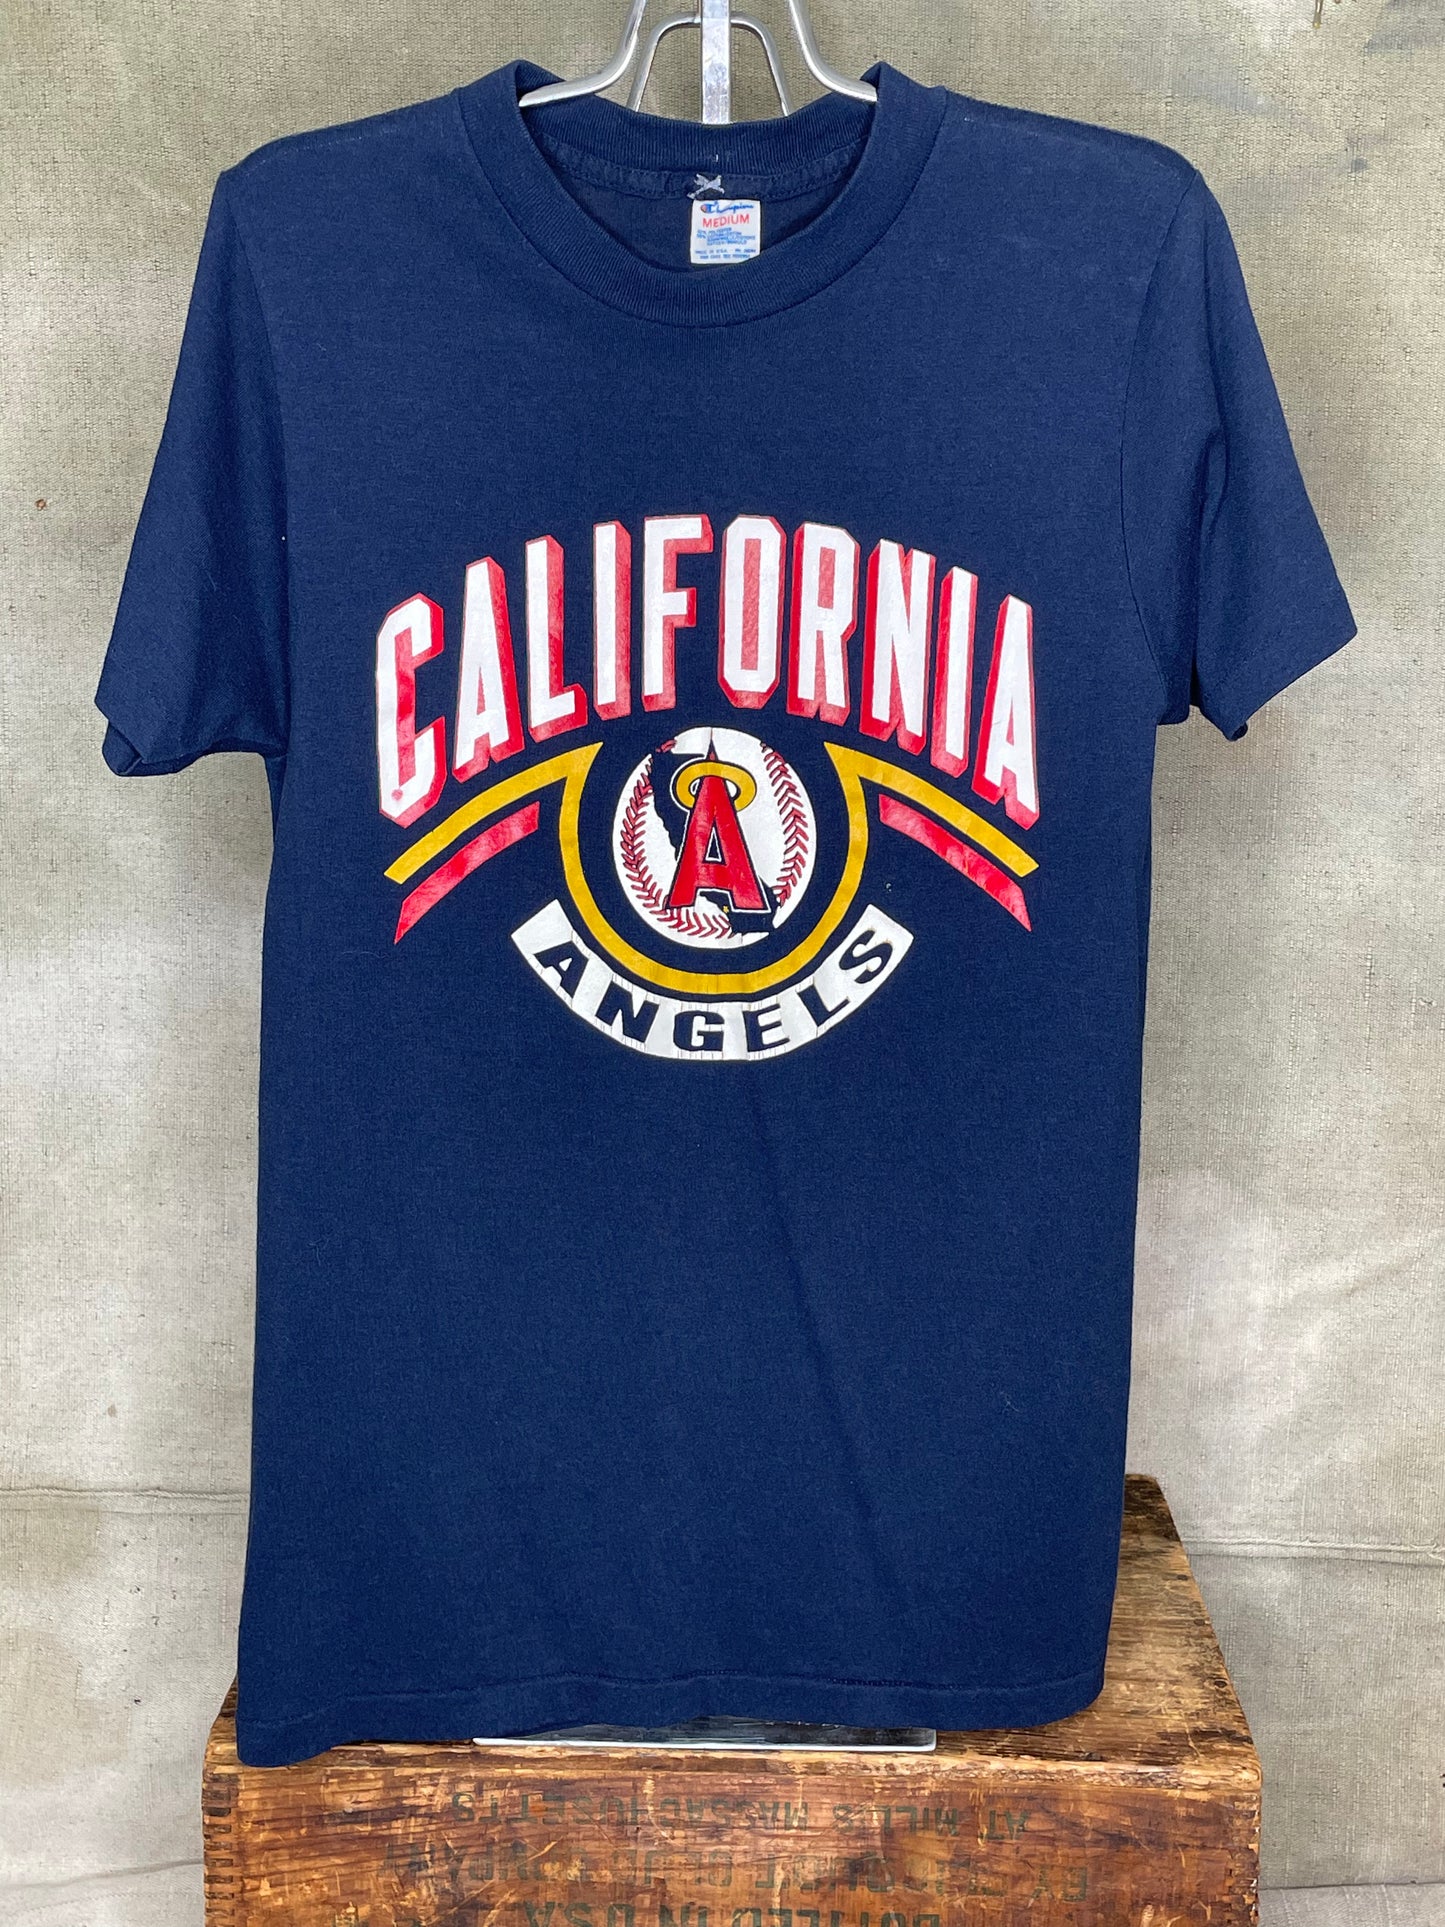 Vintage California Angels MLB Baseball Championship Shirt XS/S